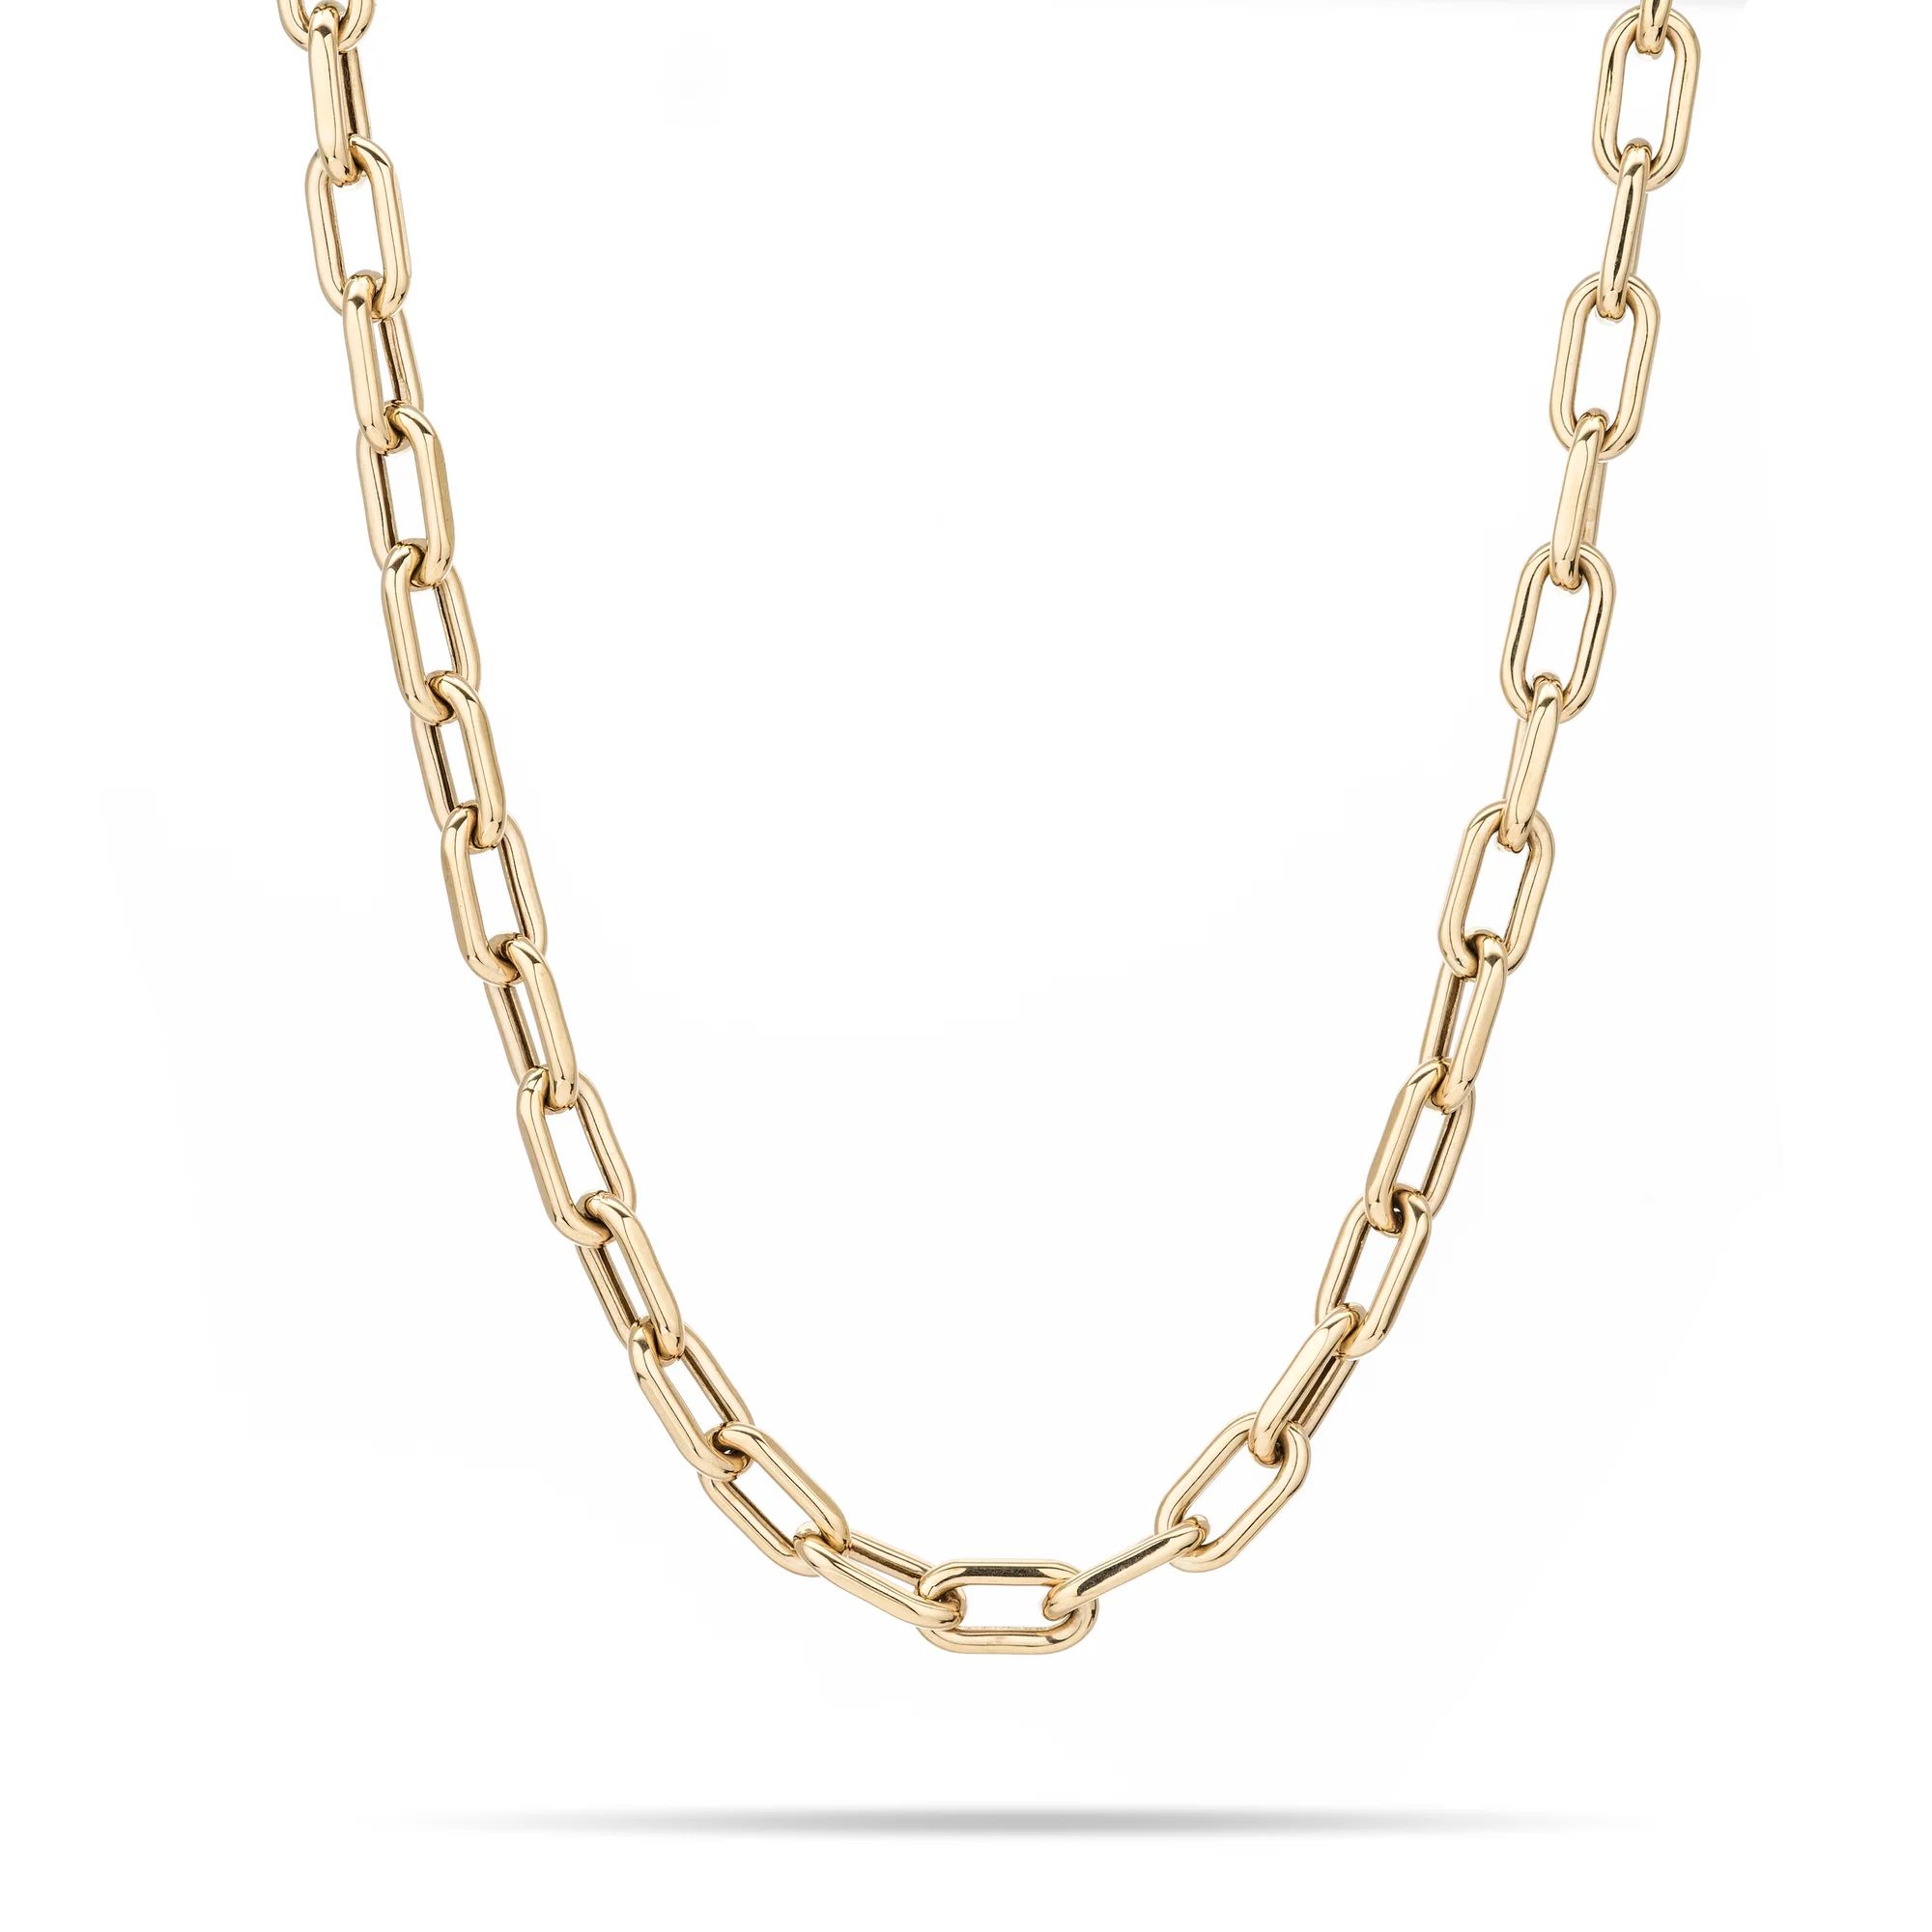 7mm Italian Chain Link Necklace | Adina Reyter